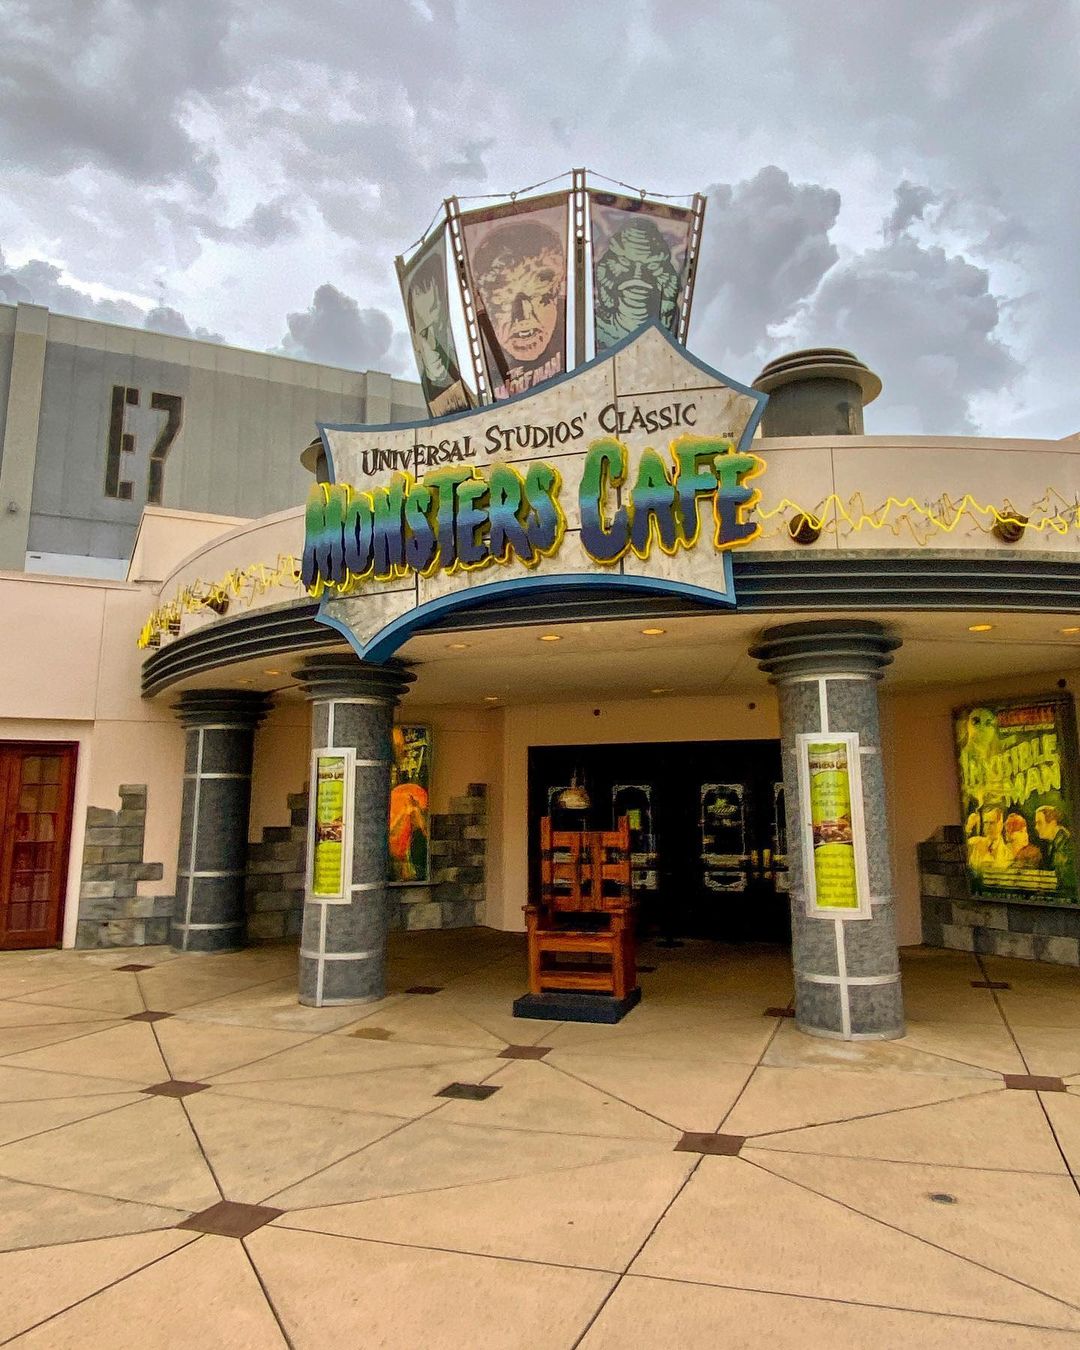 Classic Monsters Cafe - Ristorante Universal Studios